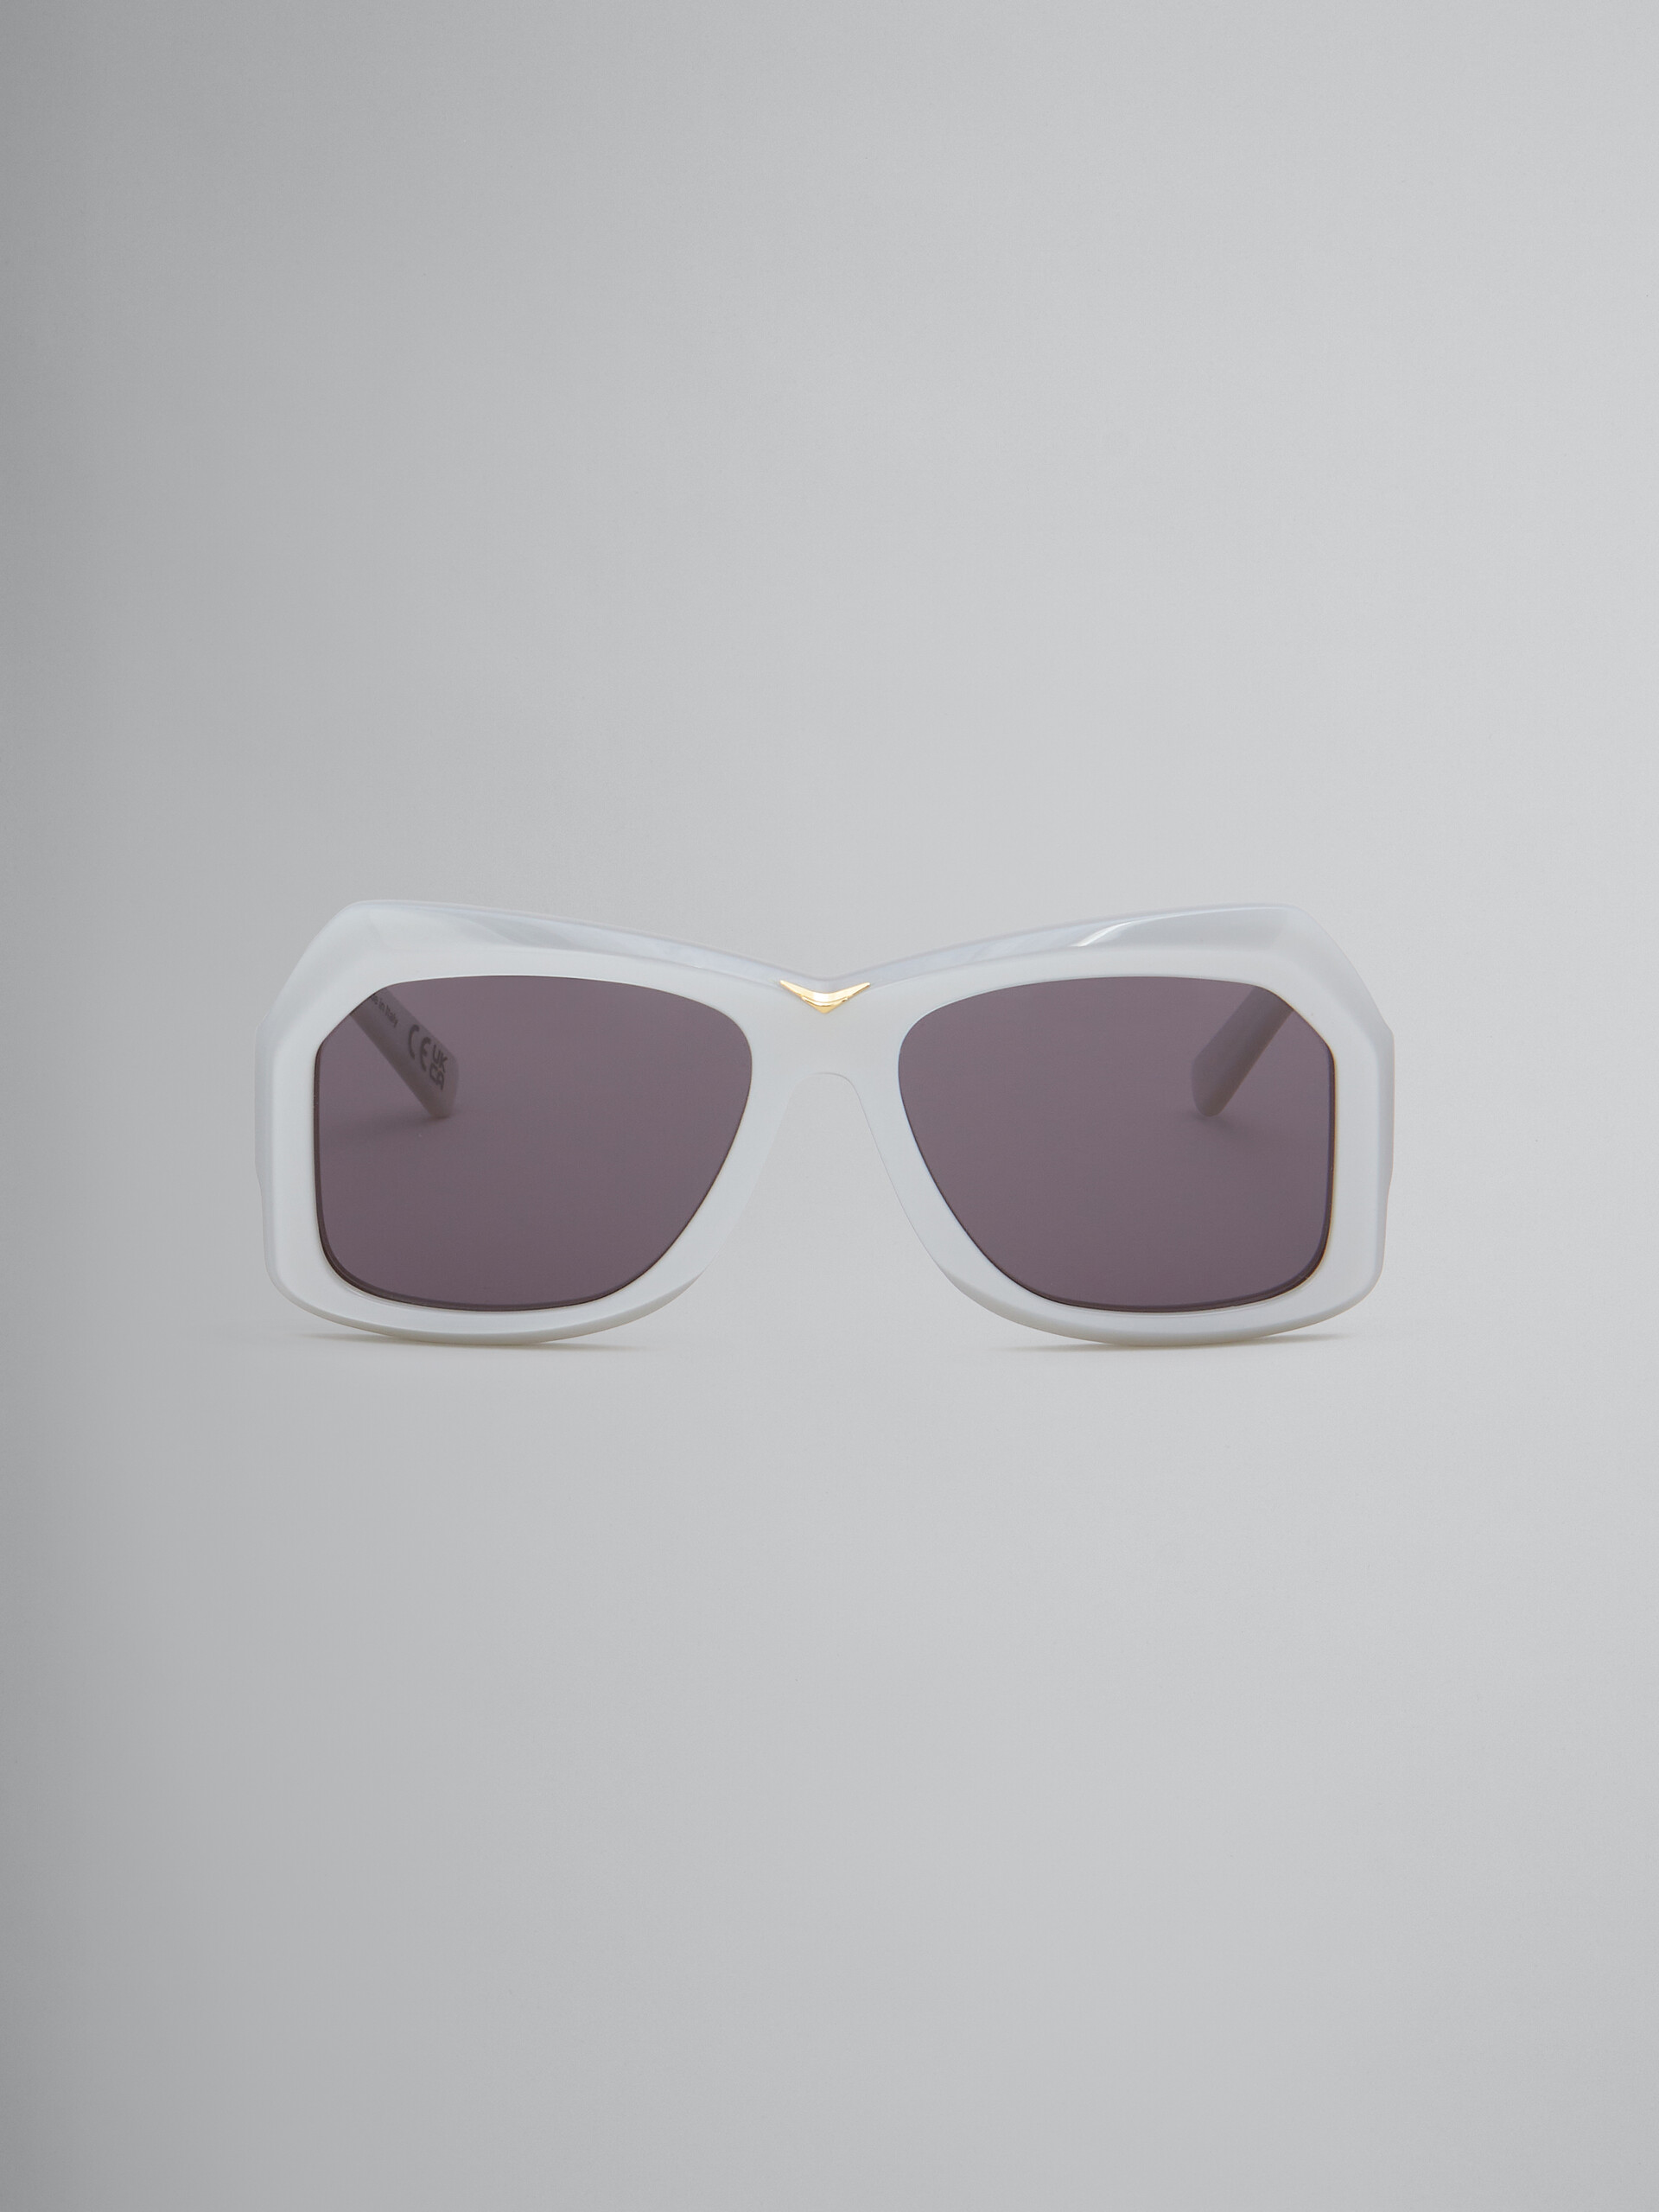 Black Tiznit sunglasses - Optical - Image 1